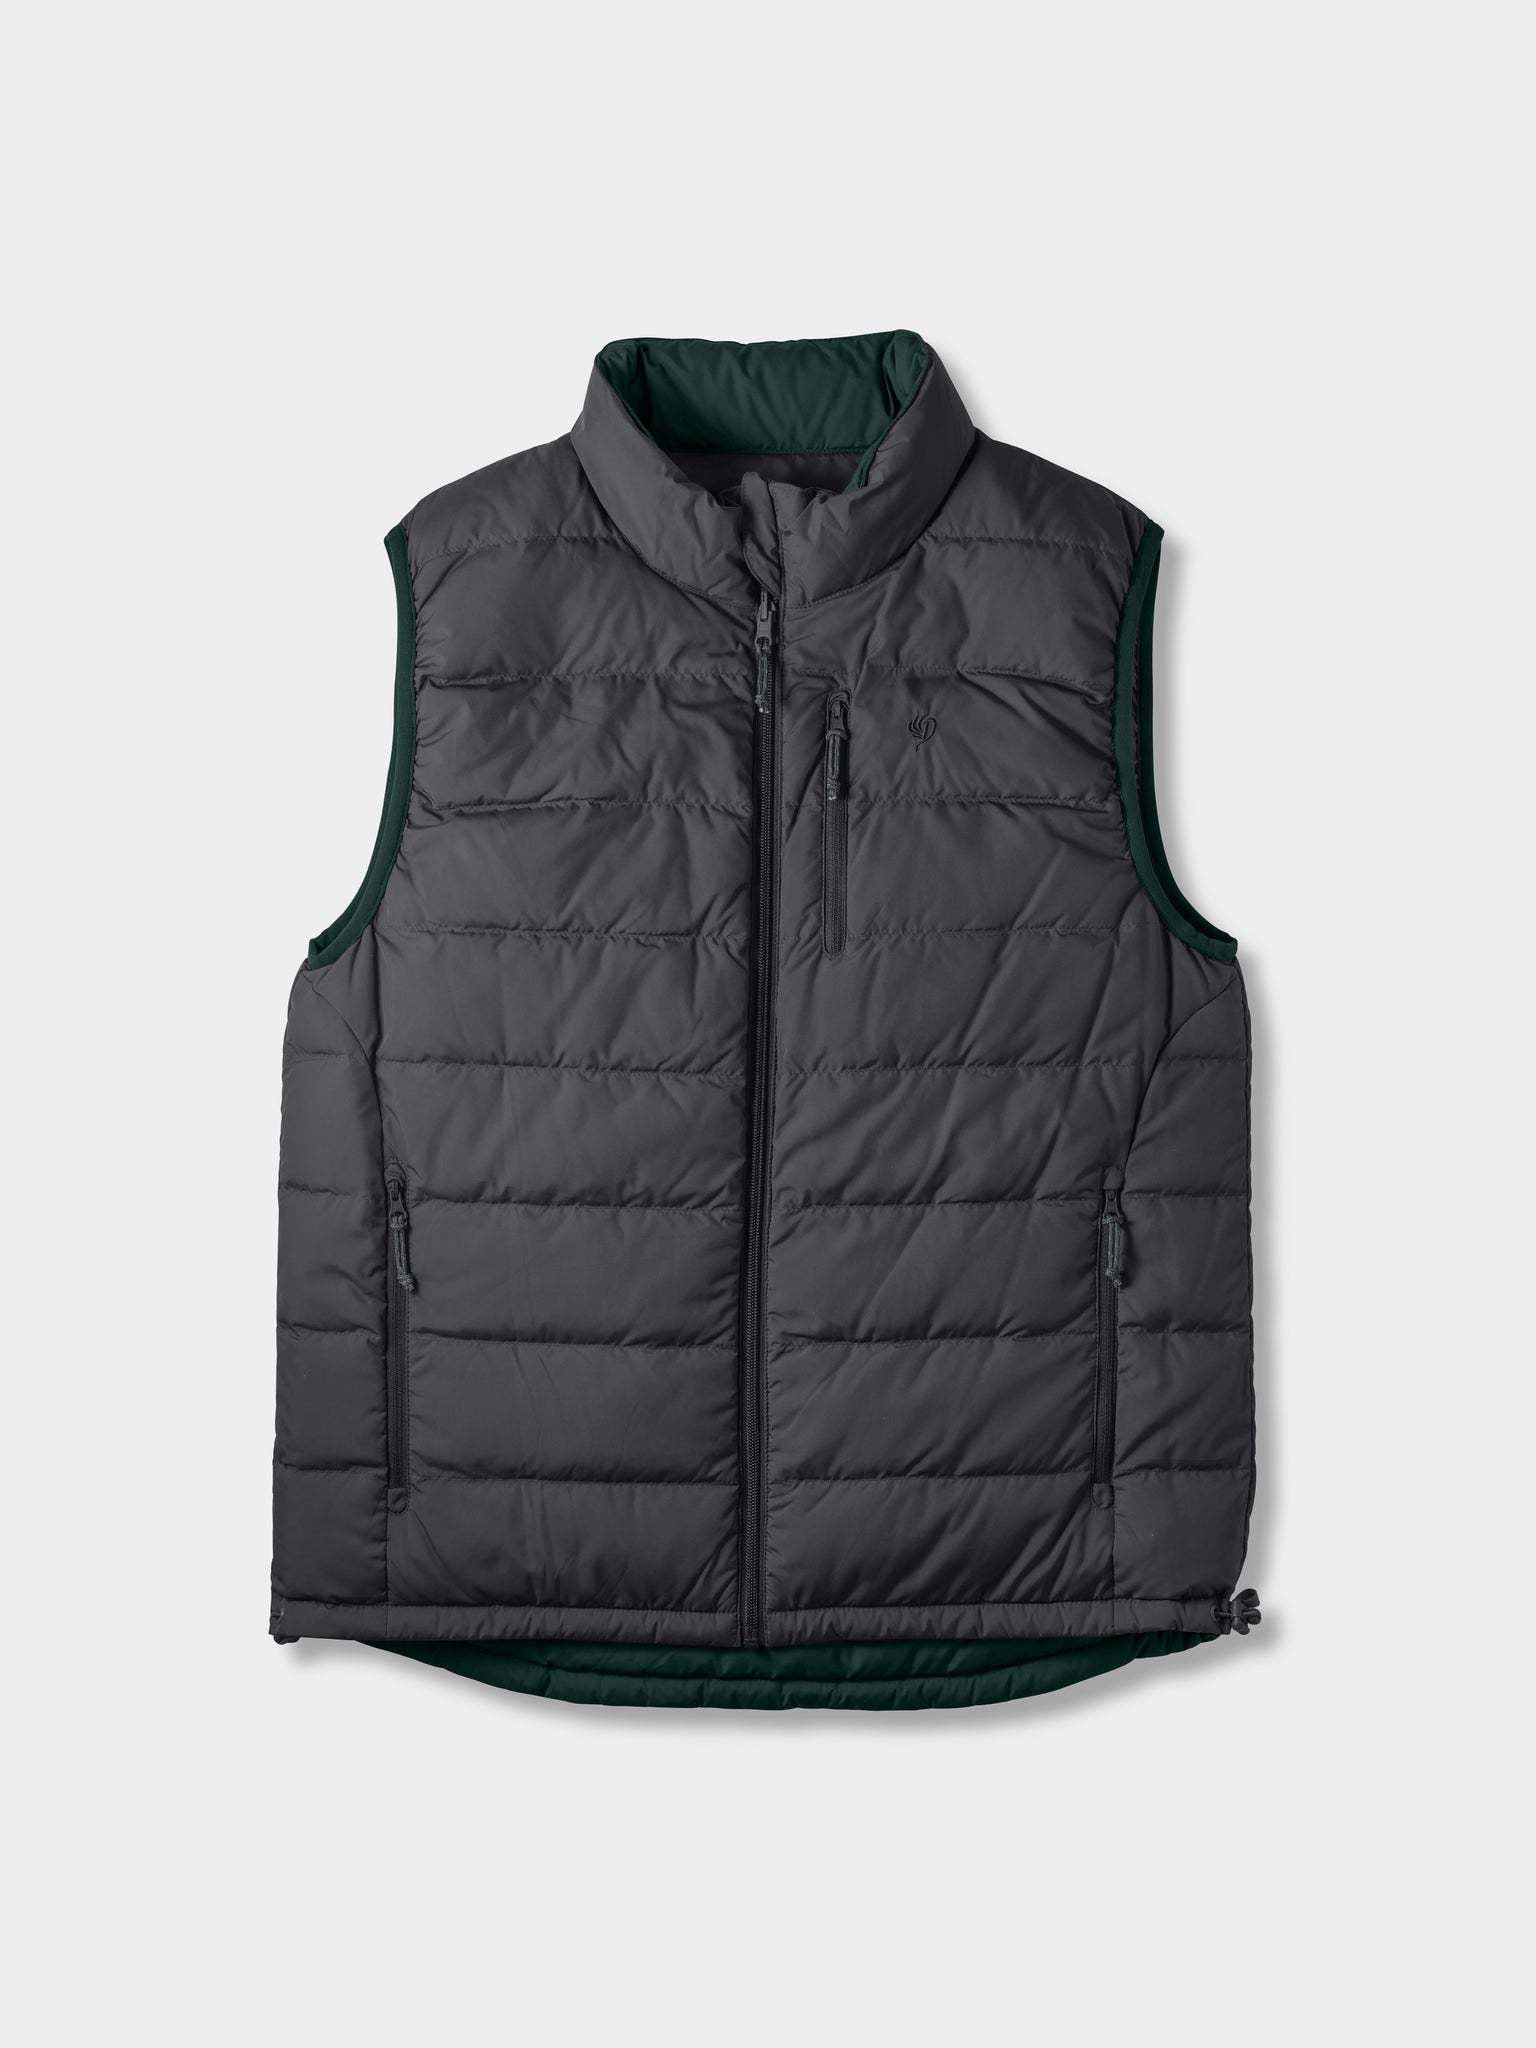 DryDown Reversible Vest - Pine/Charcoal